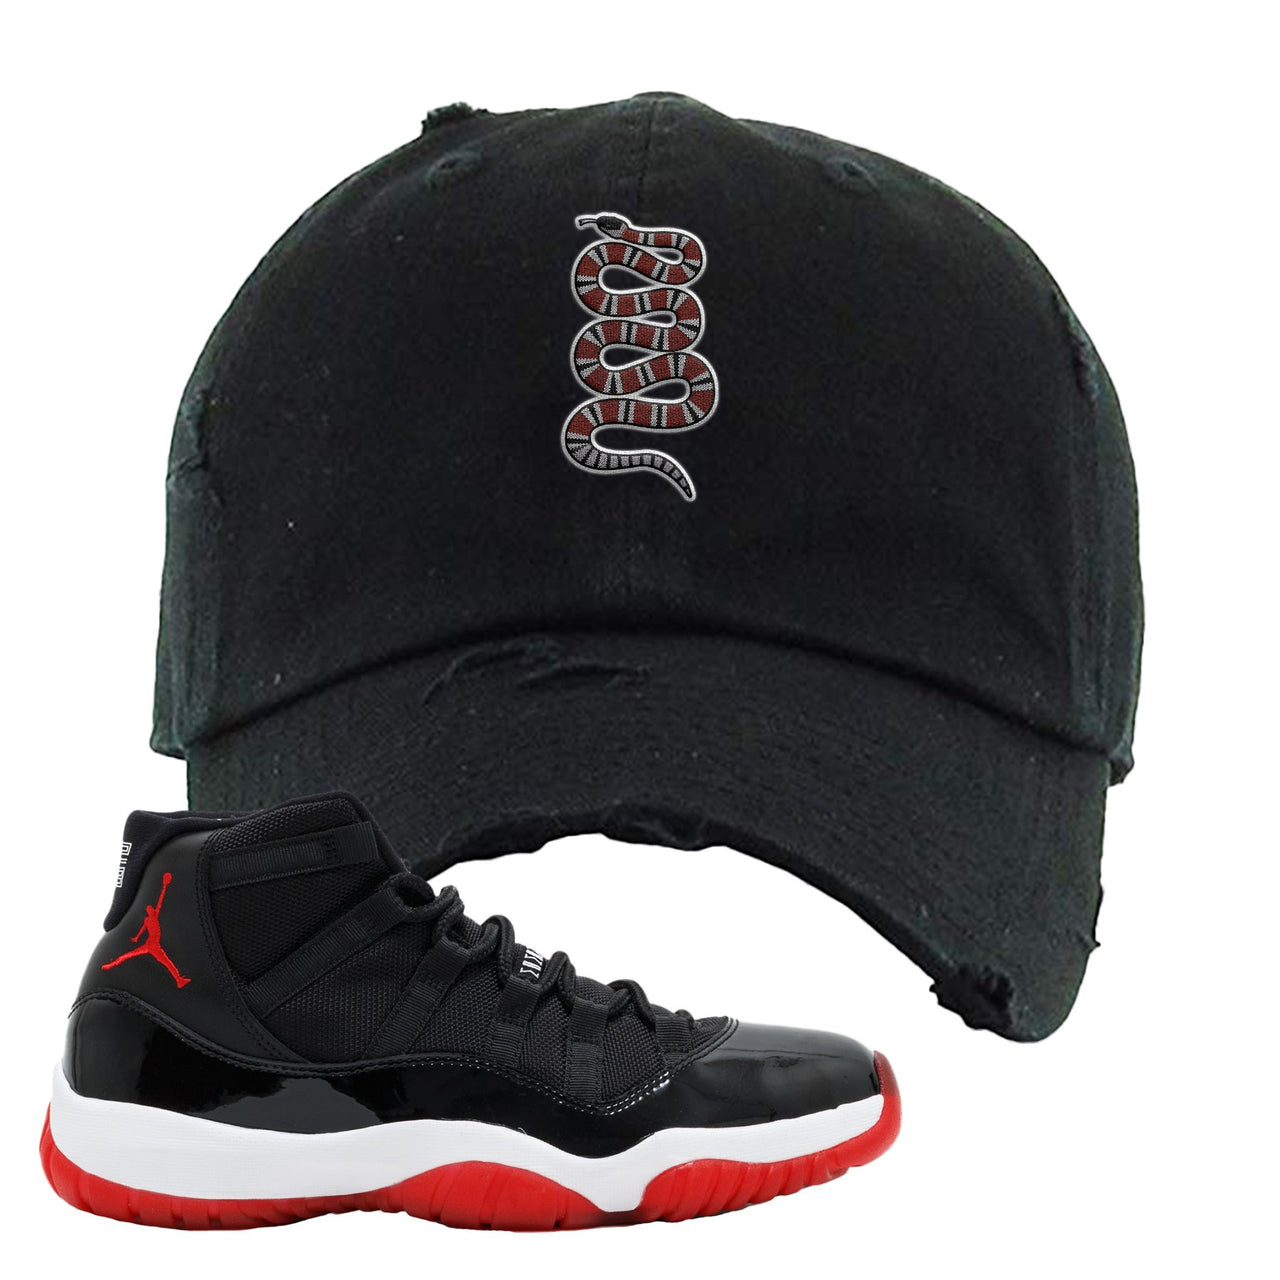 Jordan 11 Bred Coiled Snake Black Sneaker Hook Up Distressed Dad Hat